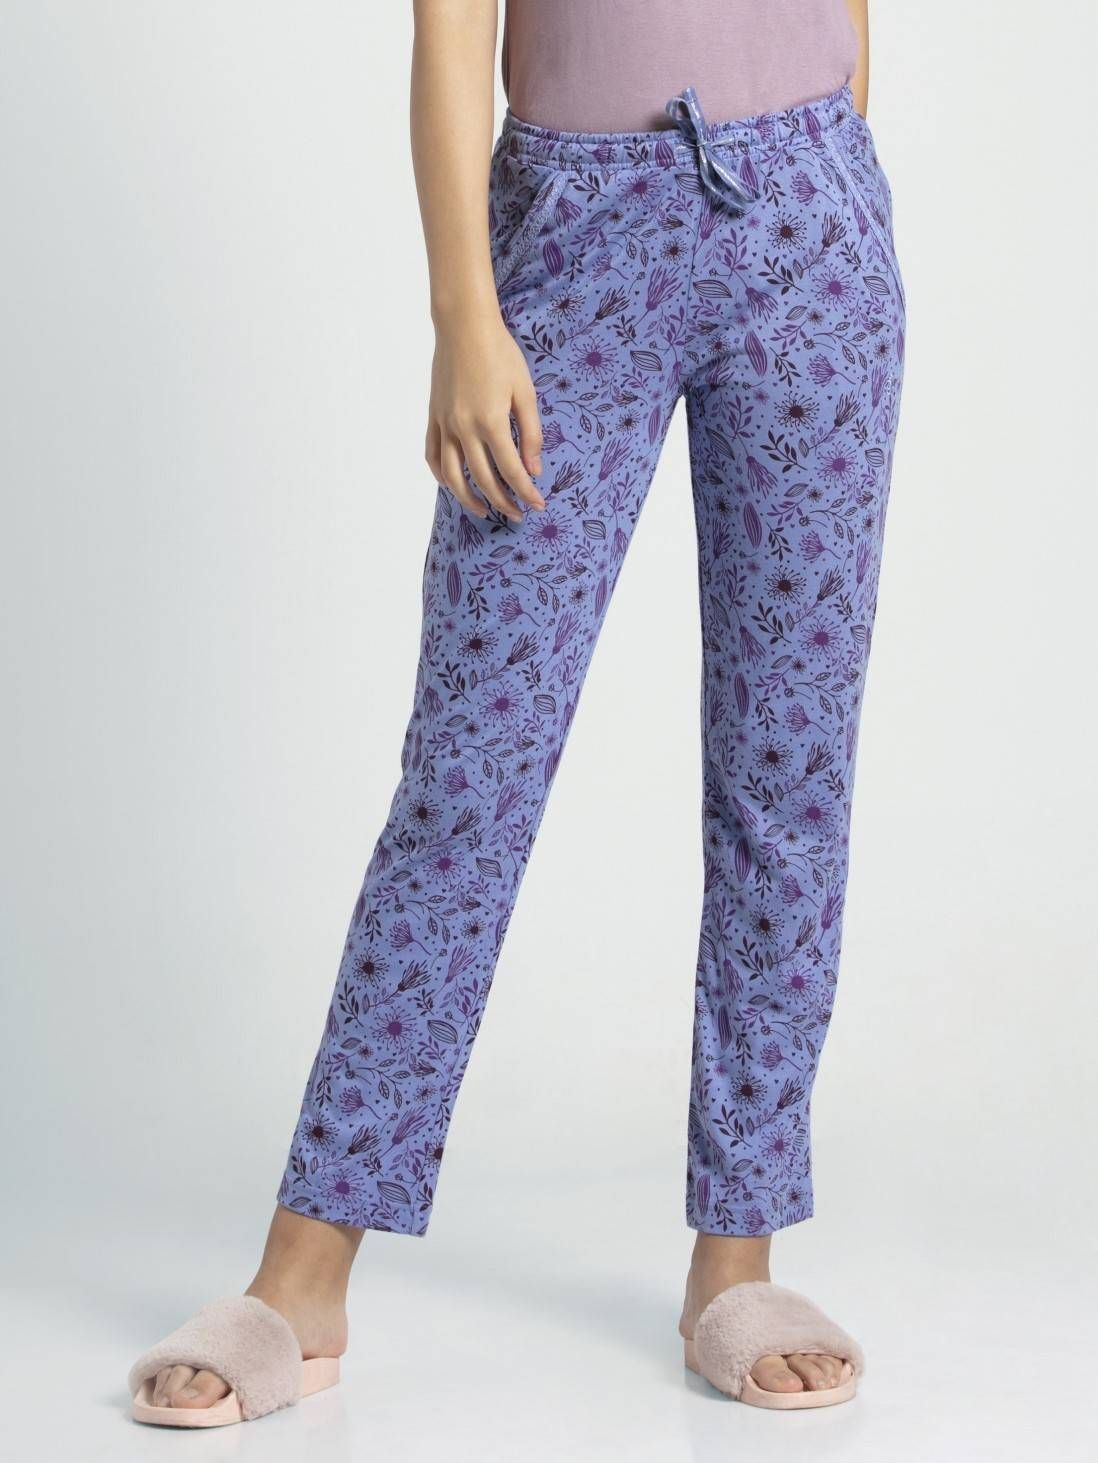 Buy Jockey Women's Printed Pajama Pant, Grey Snowflakes, XL at Amazon.in